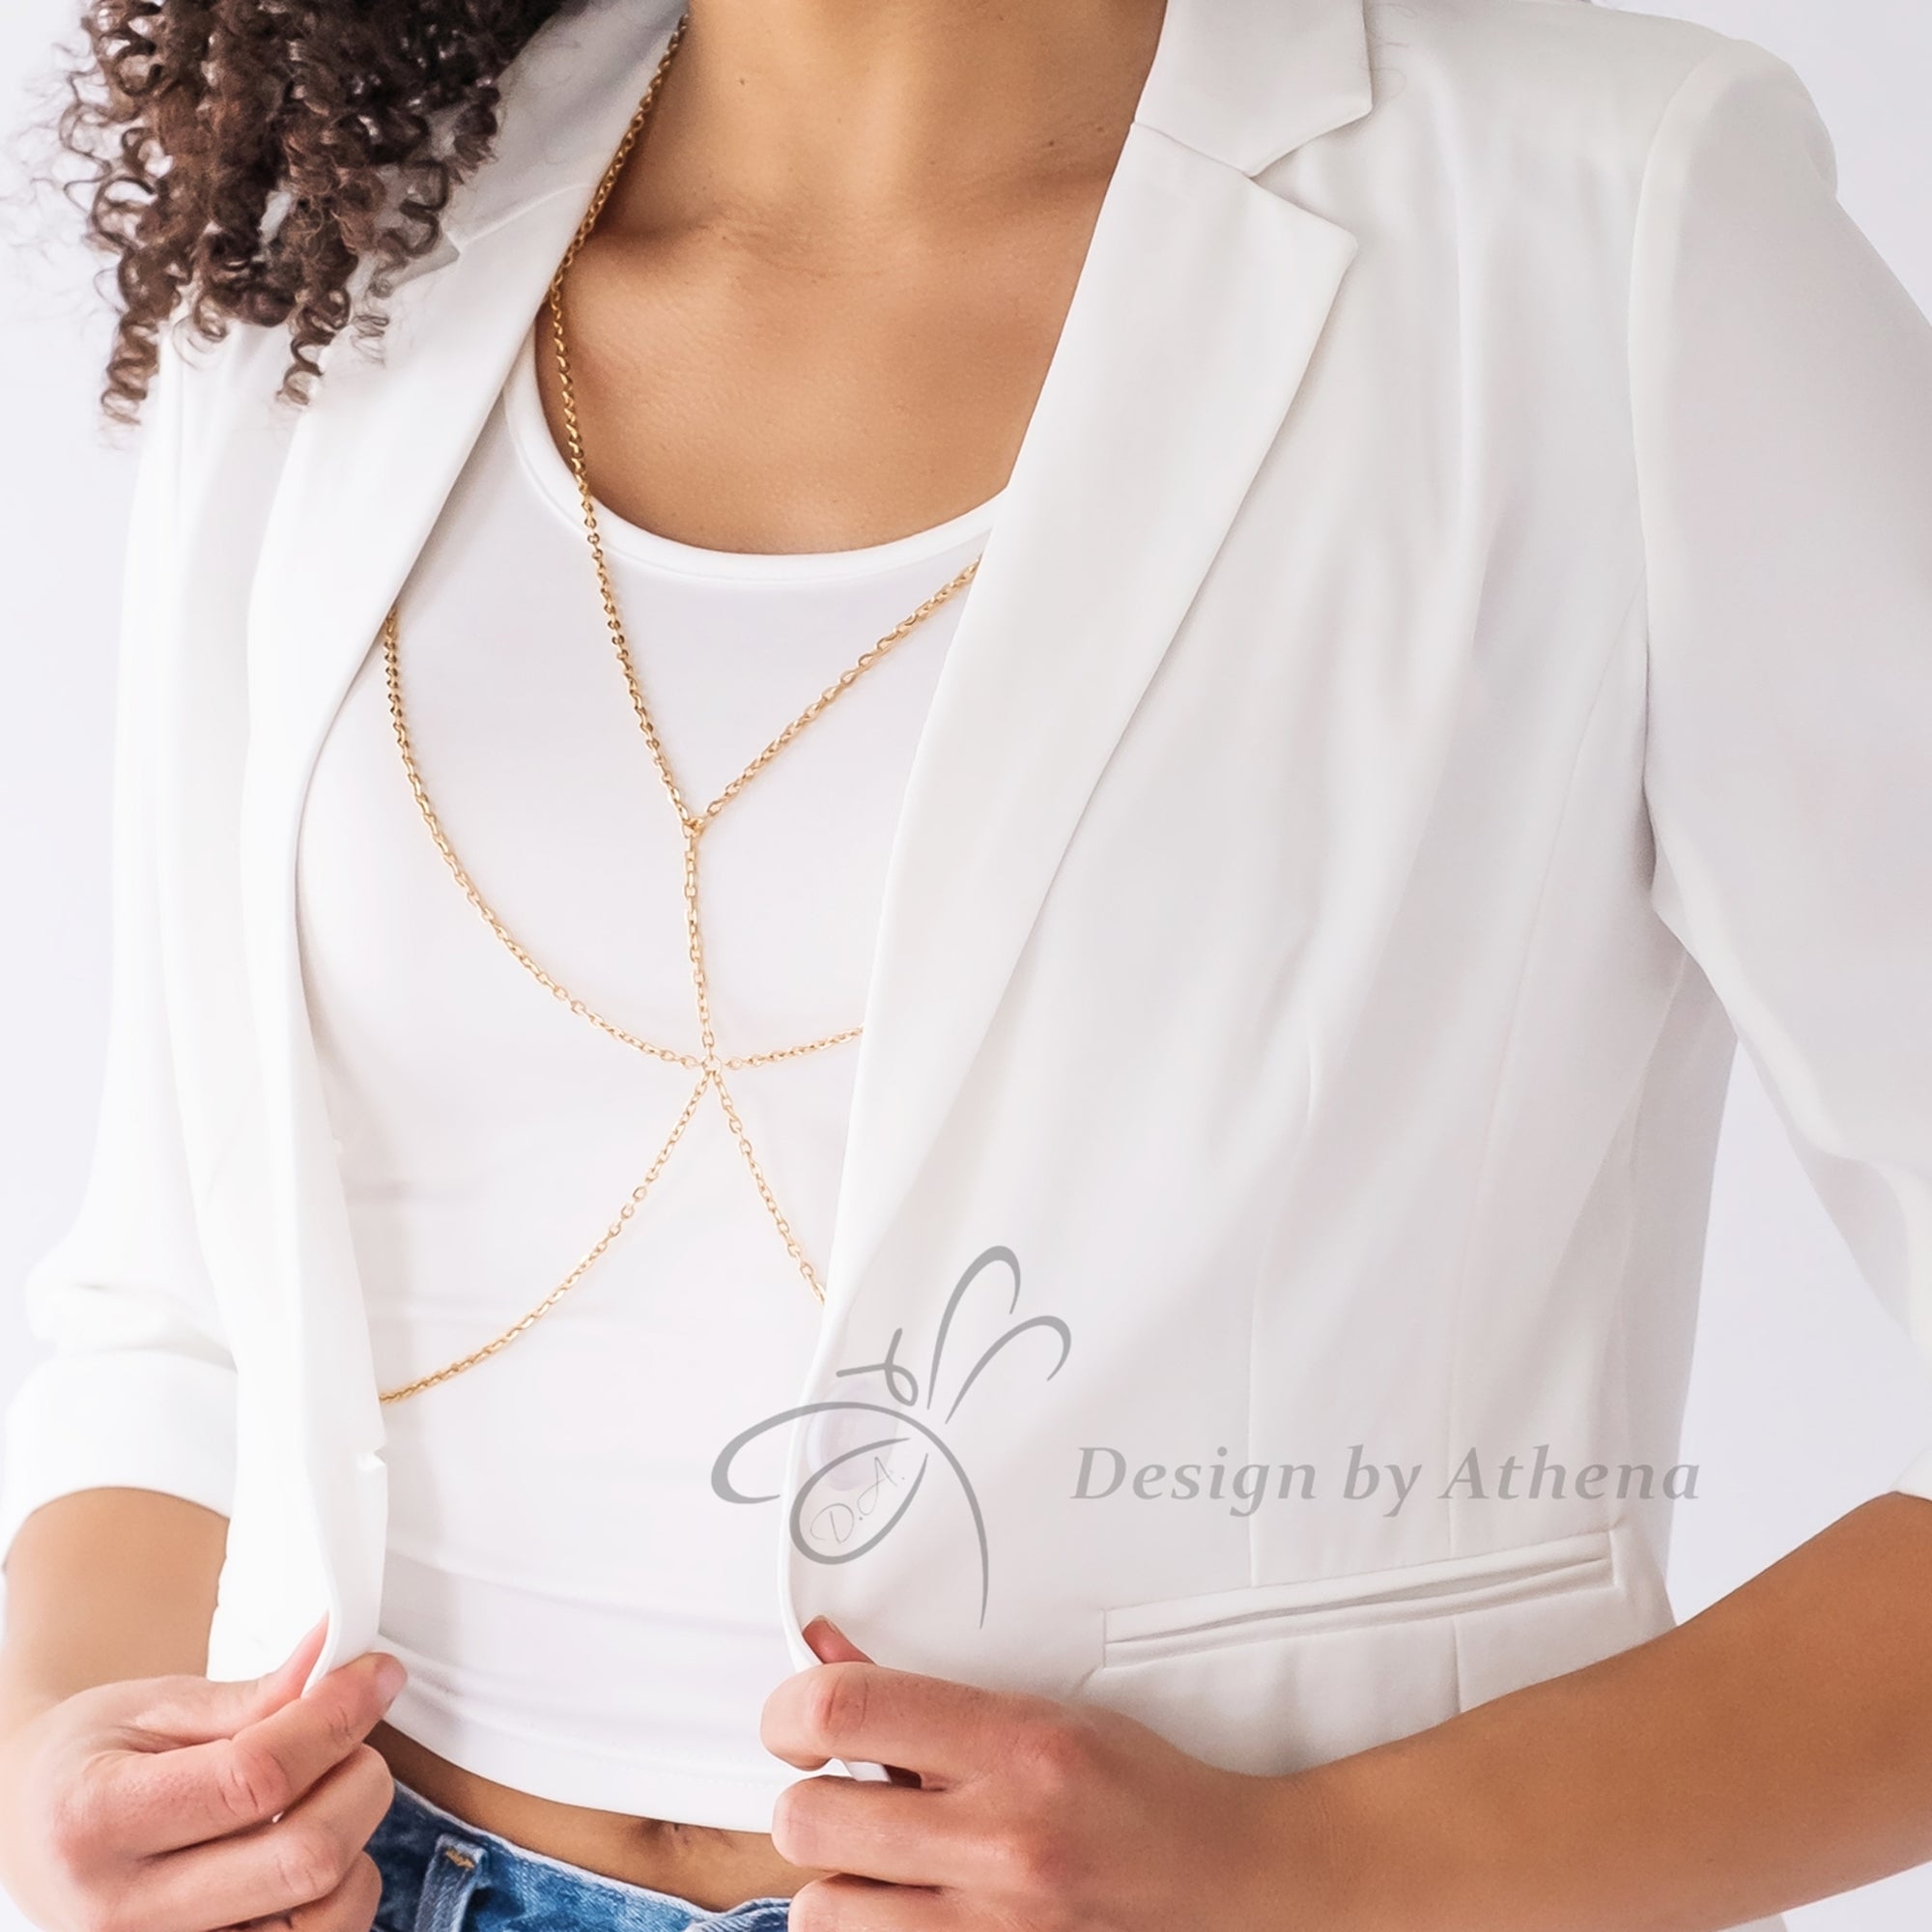 Body Chain Layered Crystal Bra Gold Harness Shiny Luxury Fashion